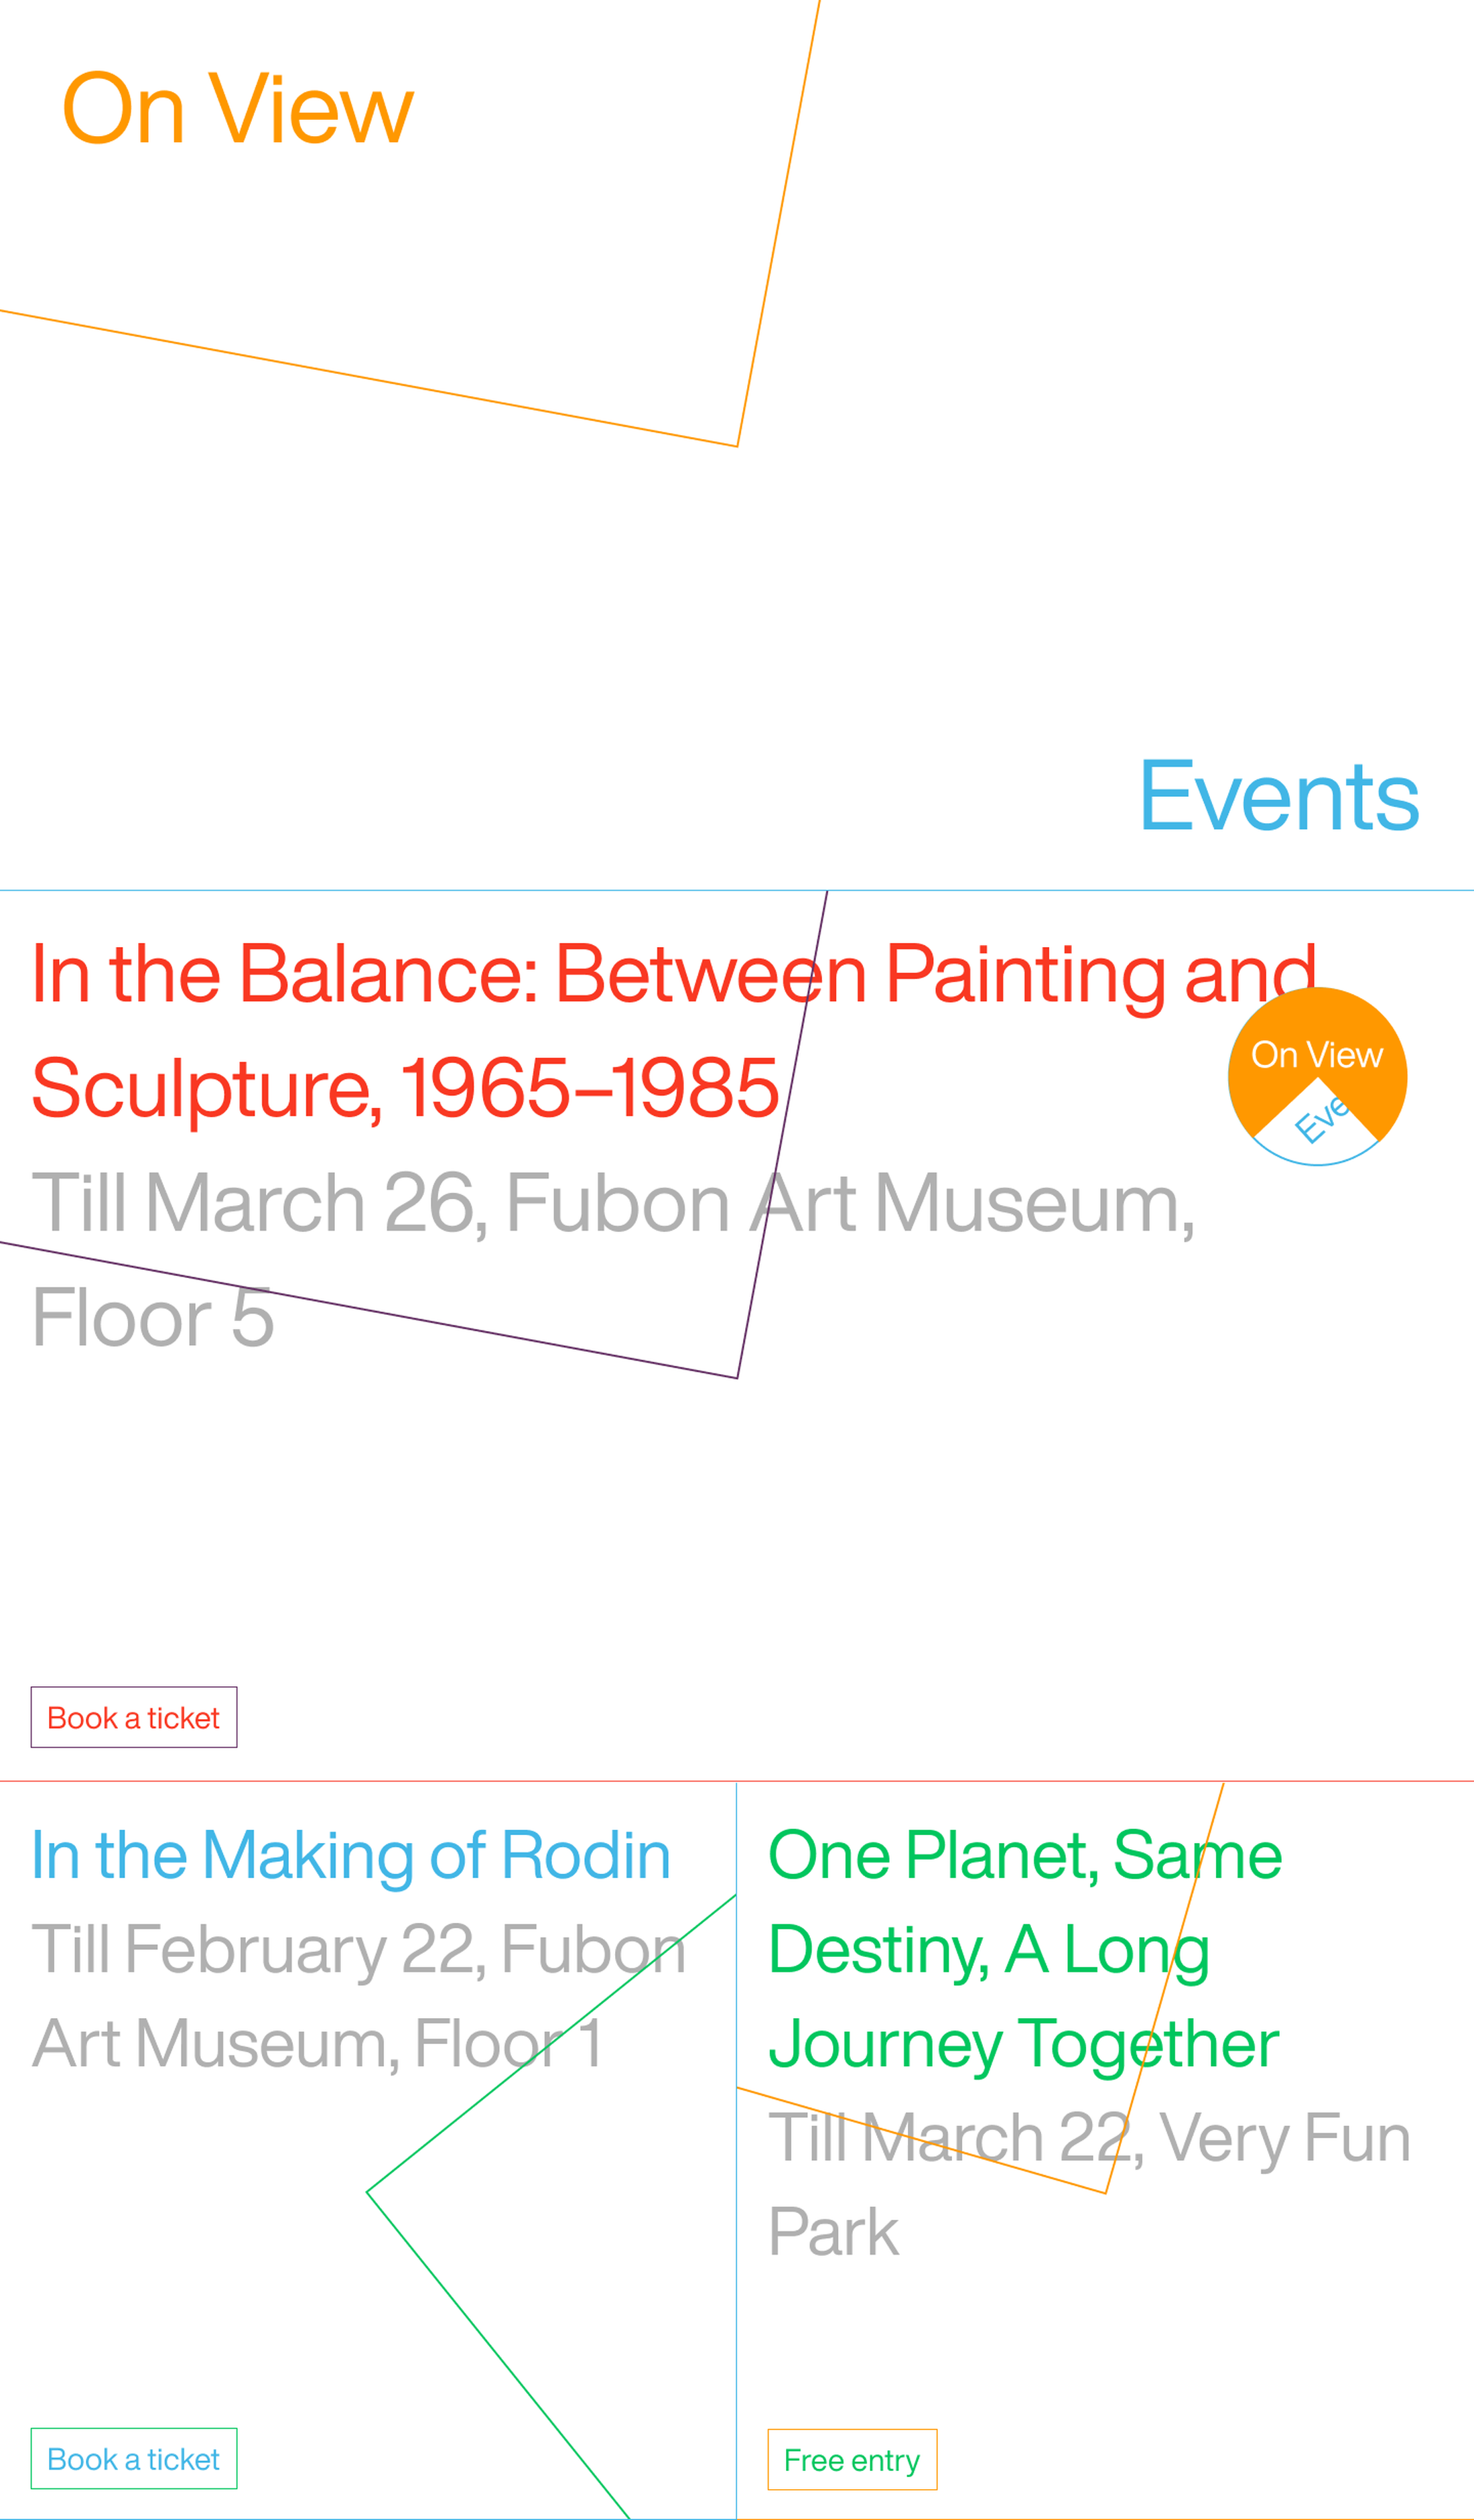 Fubon Art Museum Website (Proposal)